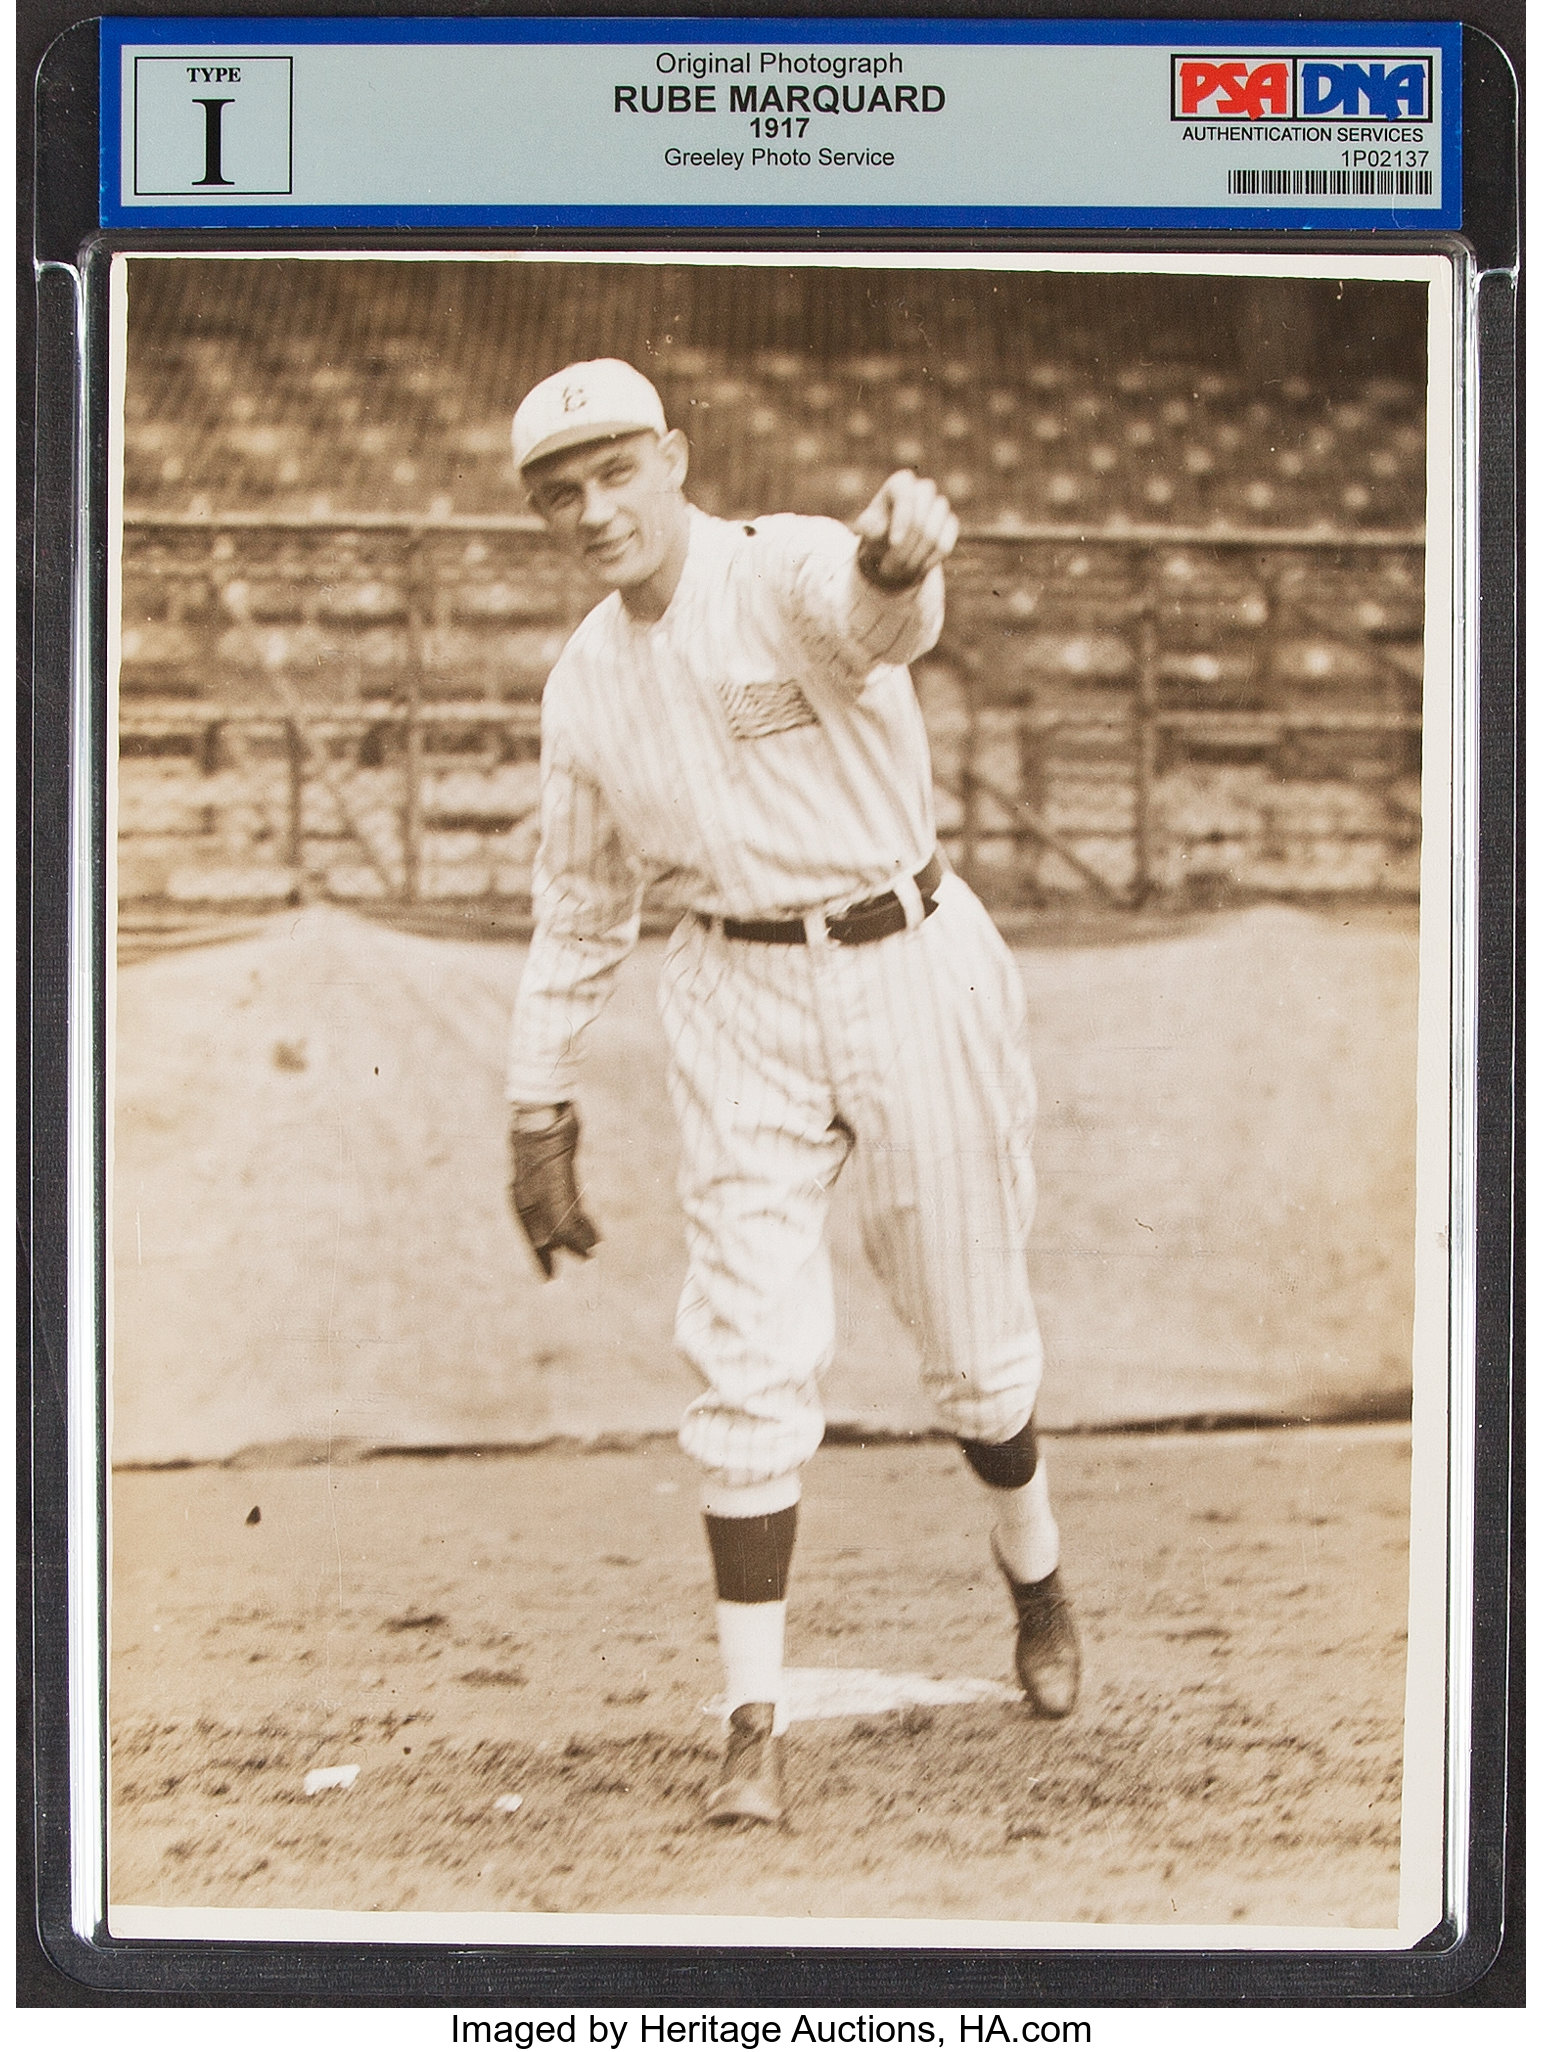 Rube Marquard, New York Giants, baseball card portrait]